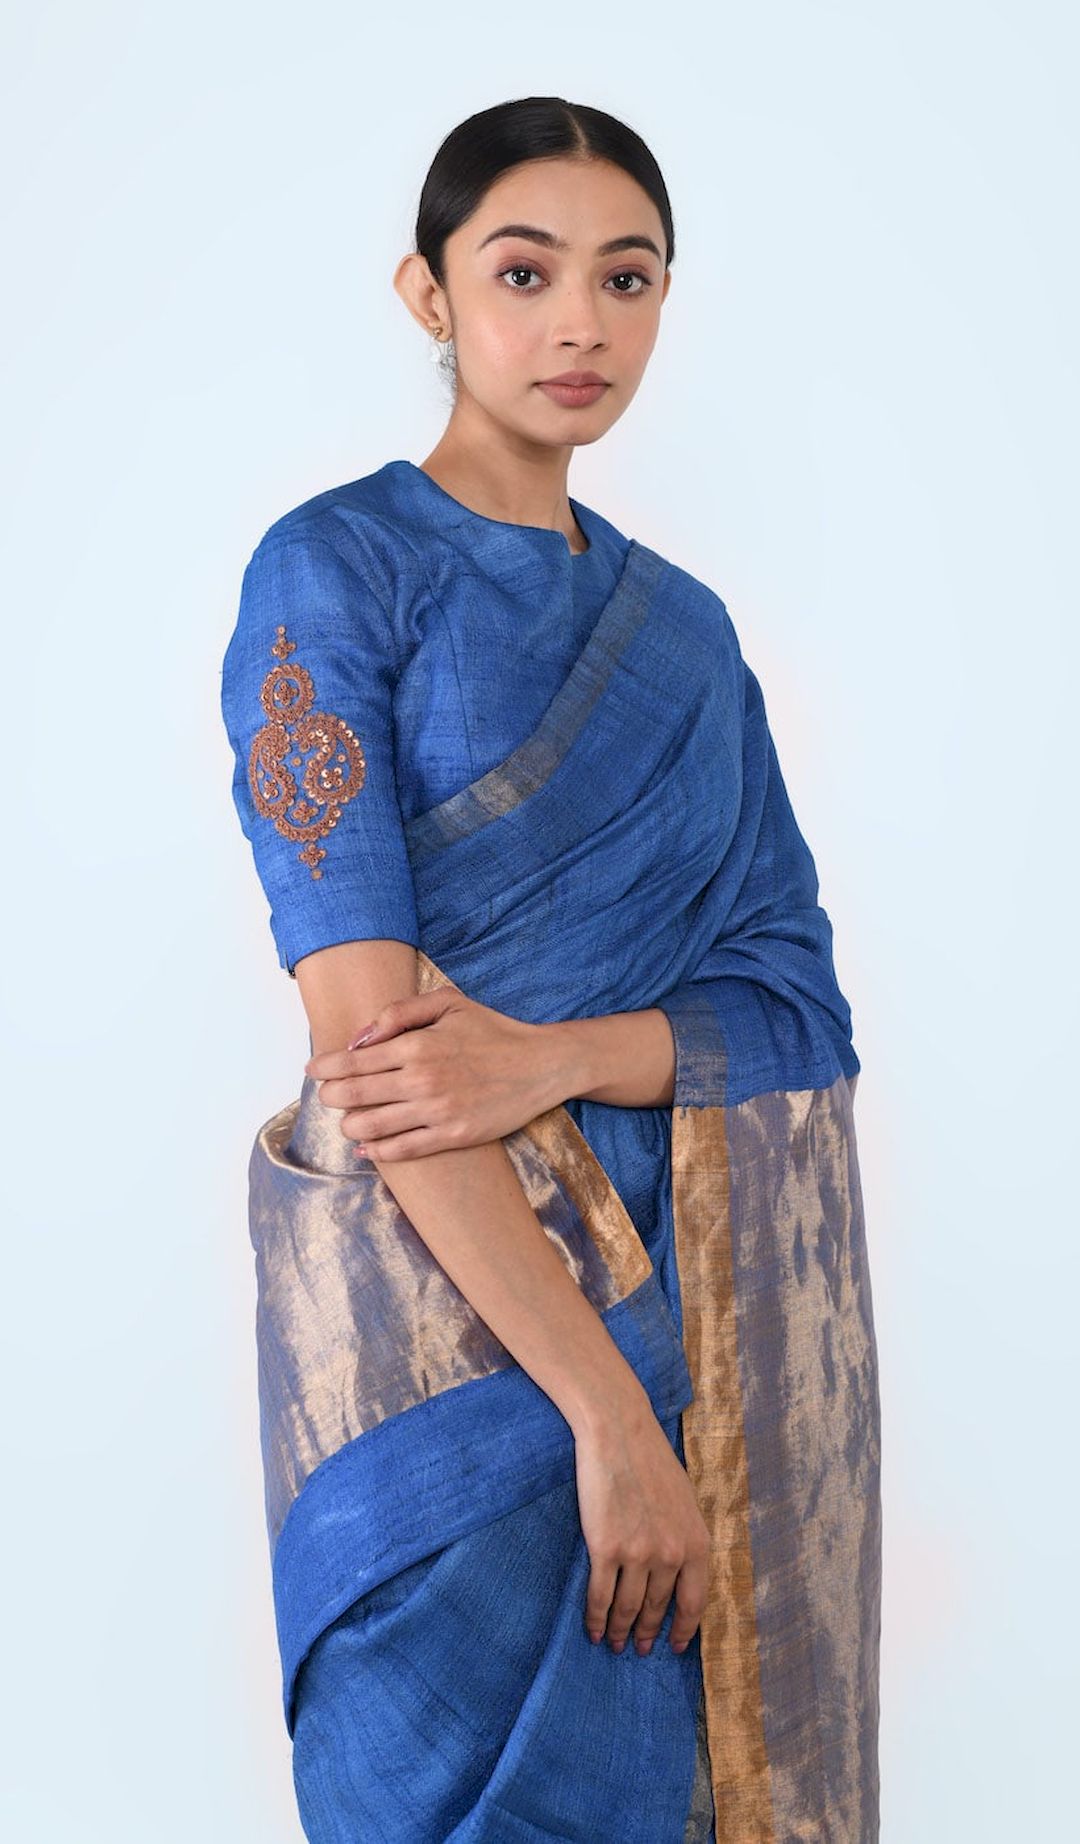 Tussar Silk Sari With Blouse (Royal Blue) - Prashant Chouhan